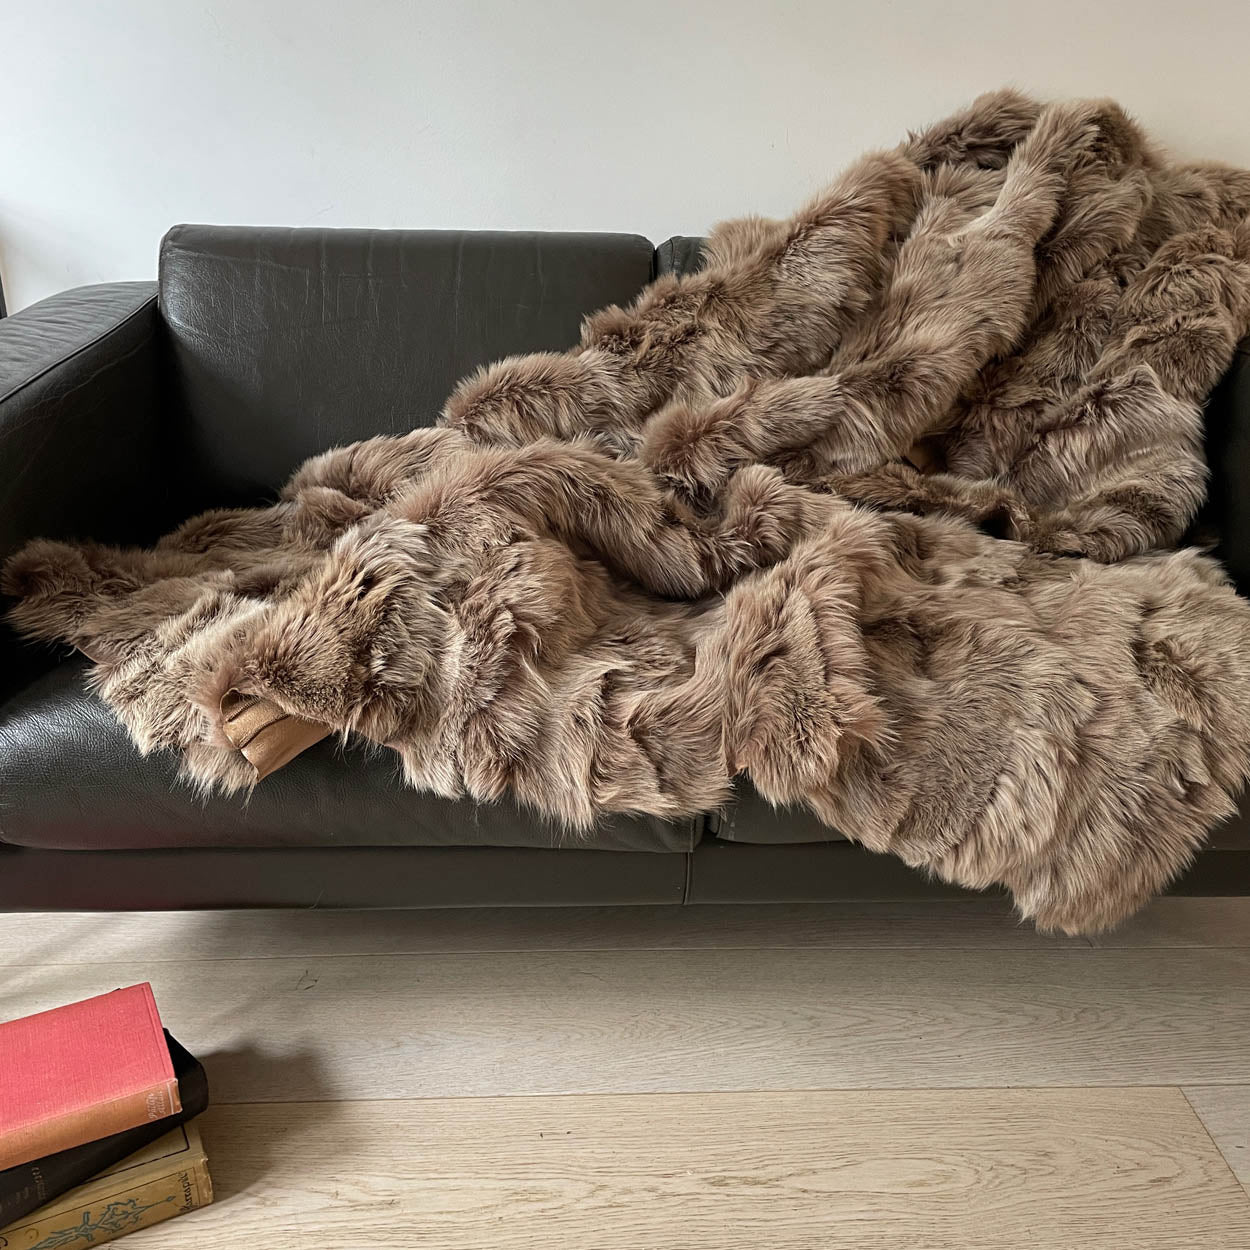 Toscana Shearling Throw Rich Tawny Brown | Shearling Rug | Fur Blanket 140cm x 170cm - Wildash London